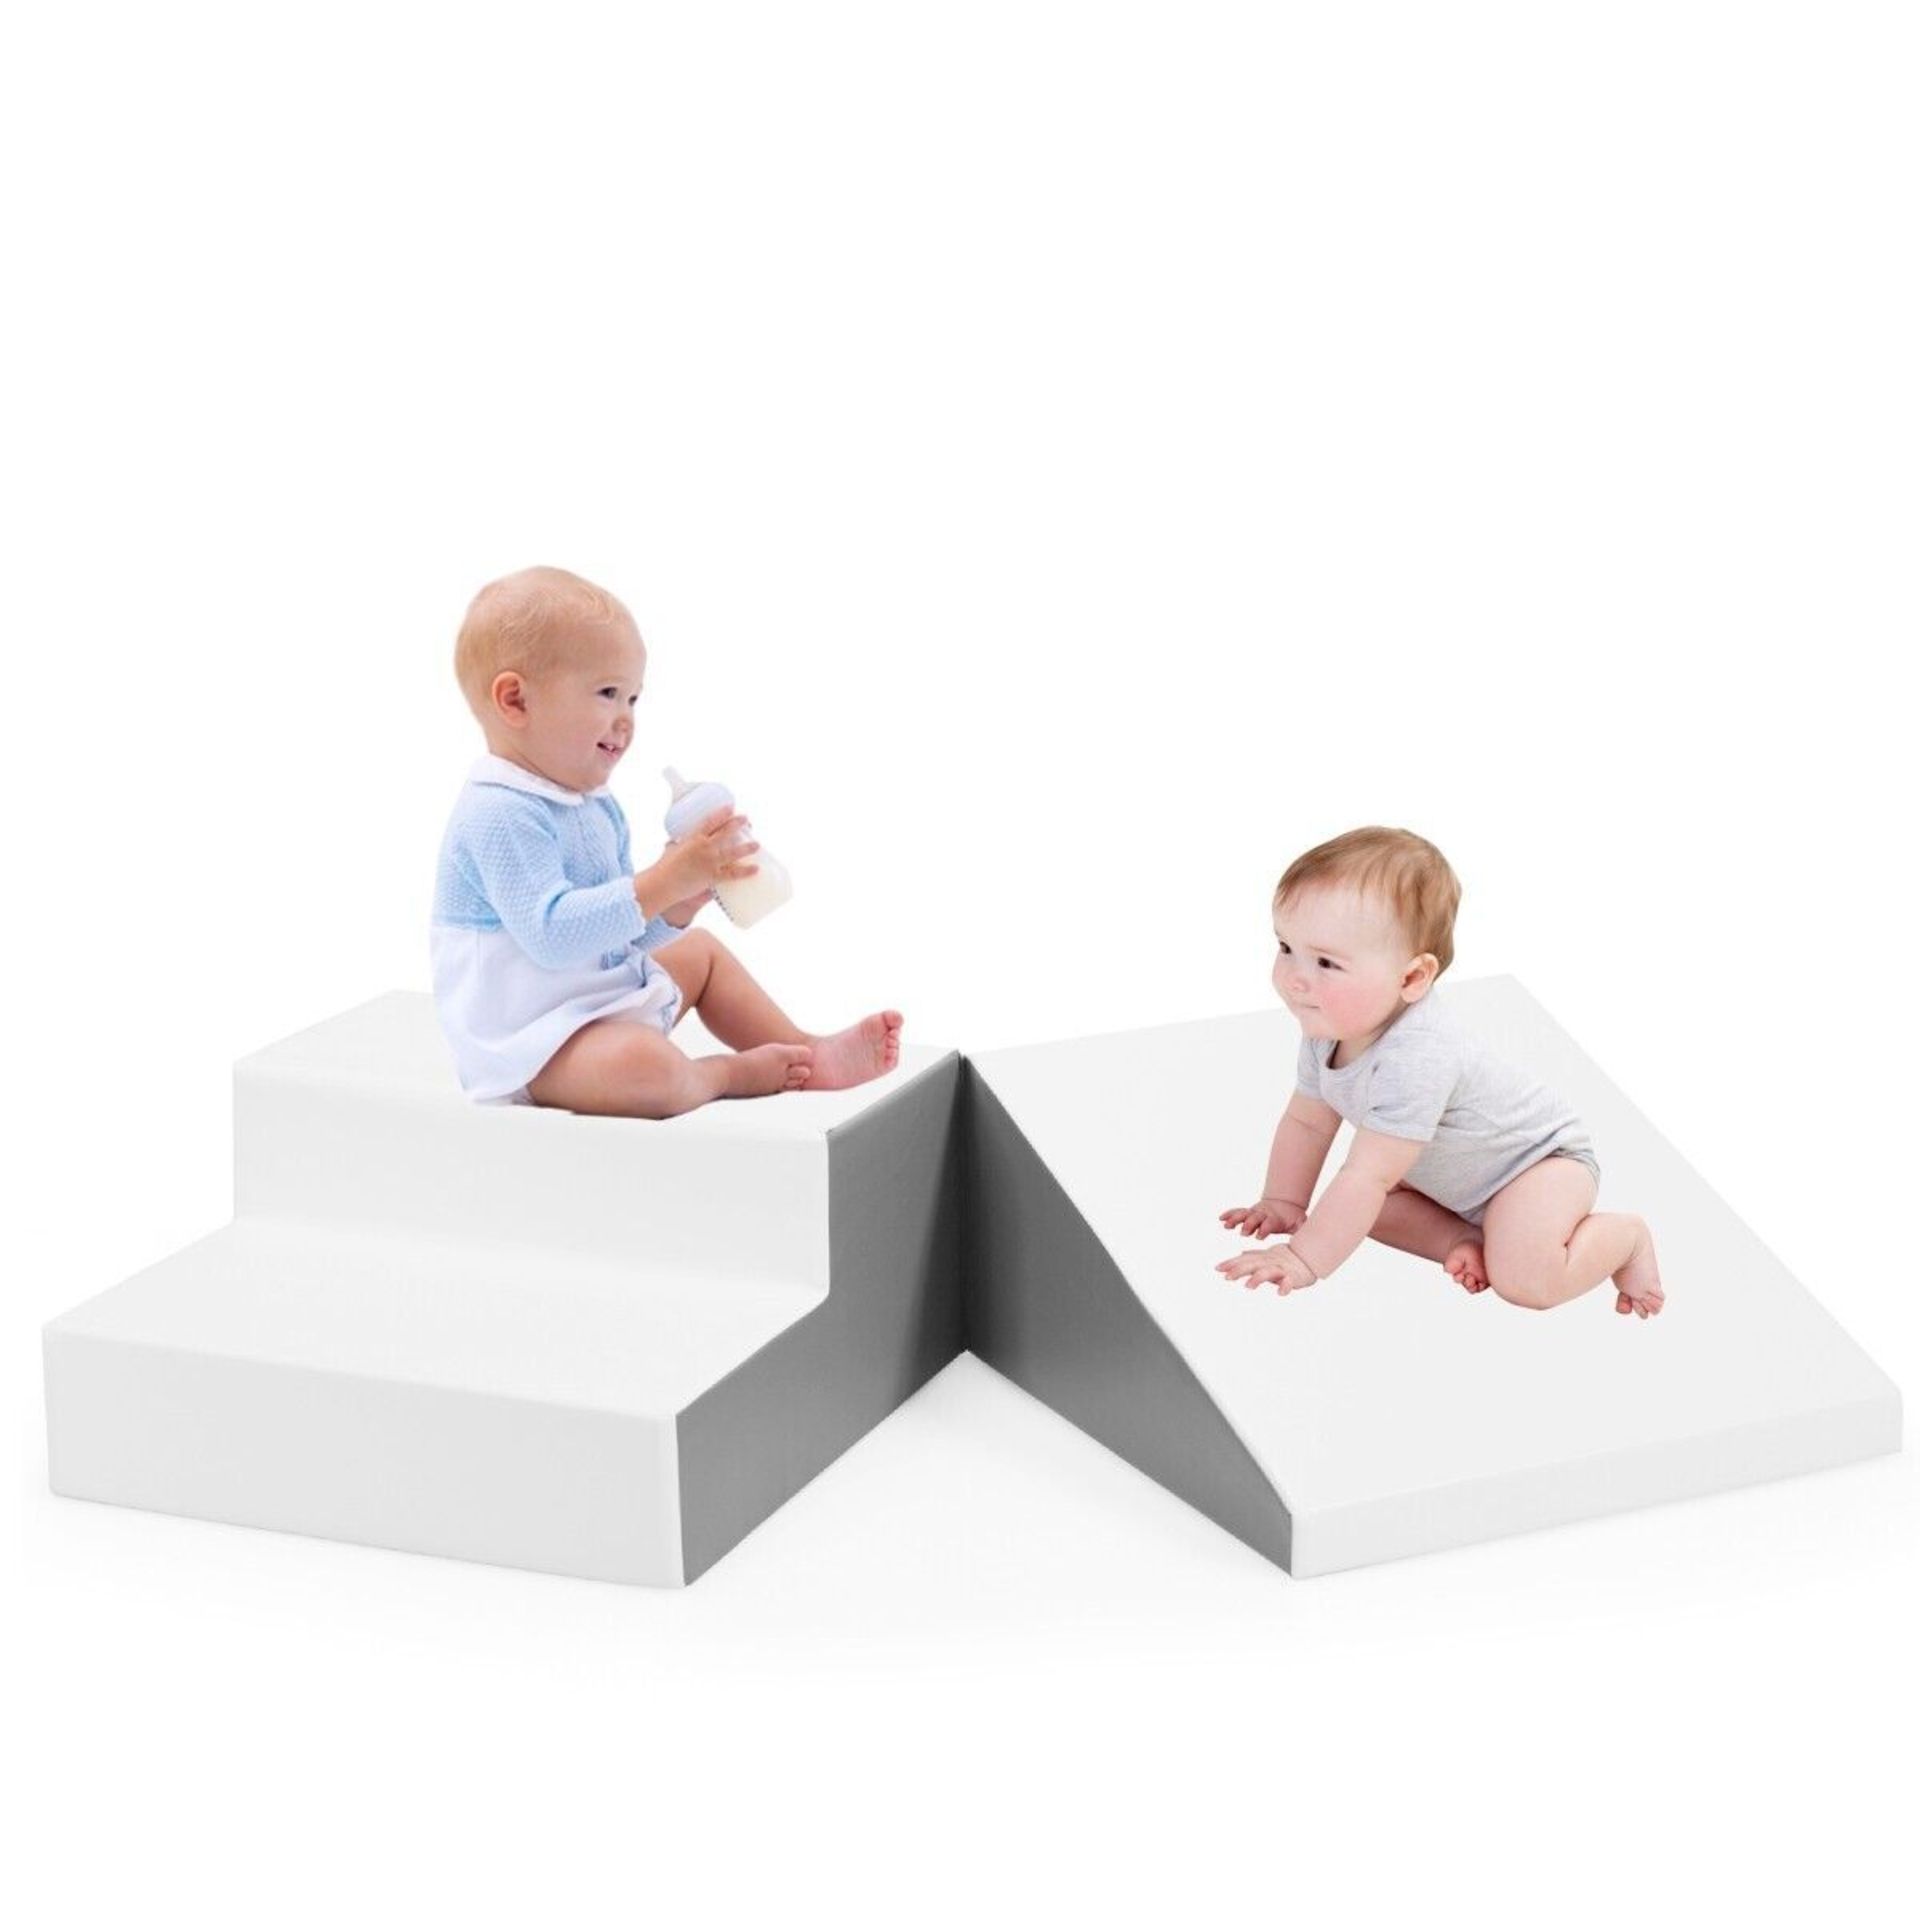 Toddler Climb and Crawl Foam Play Set Baby Soft Safe Foam Playset Activity Toy. - ER53